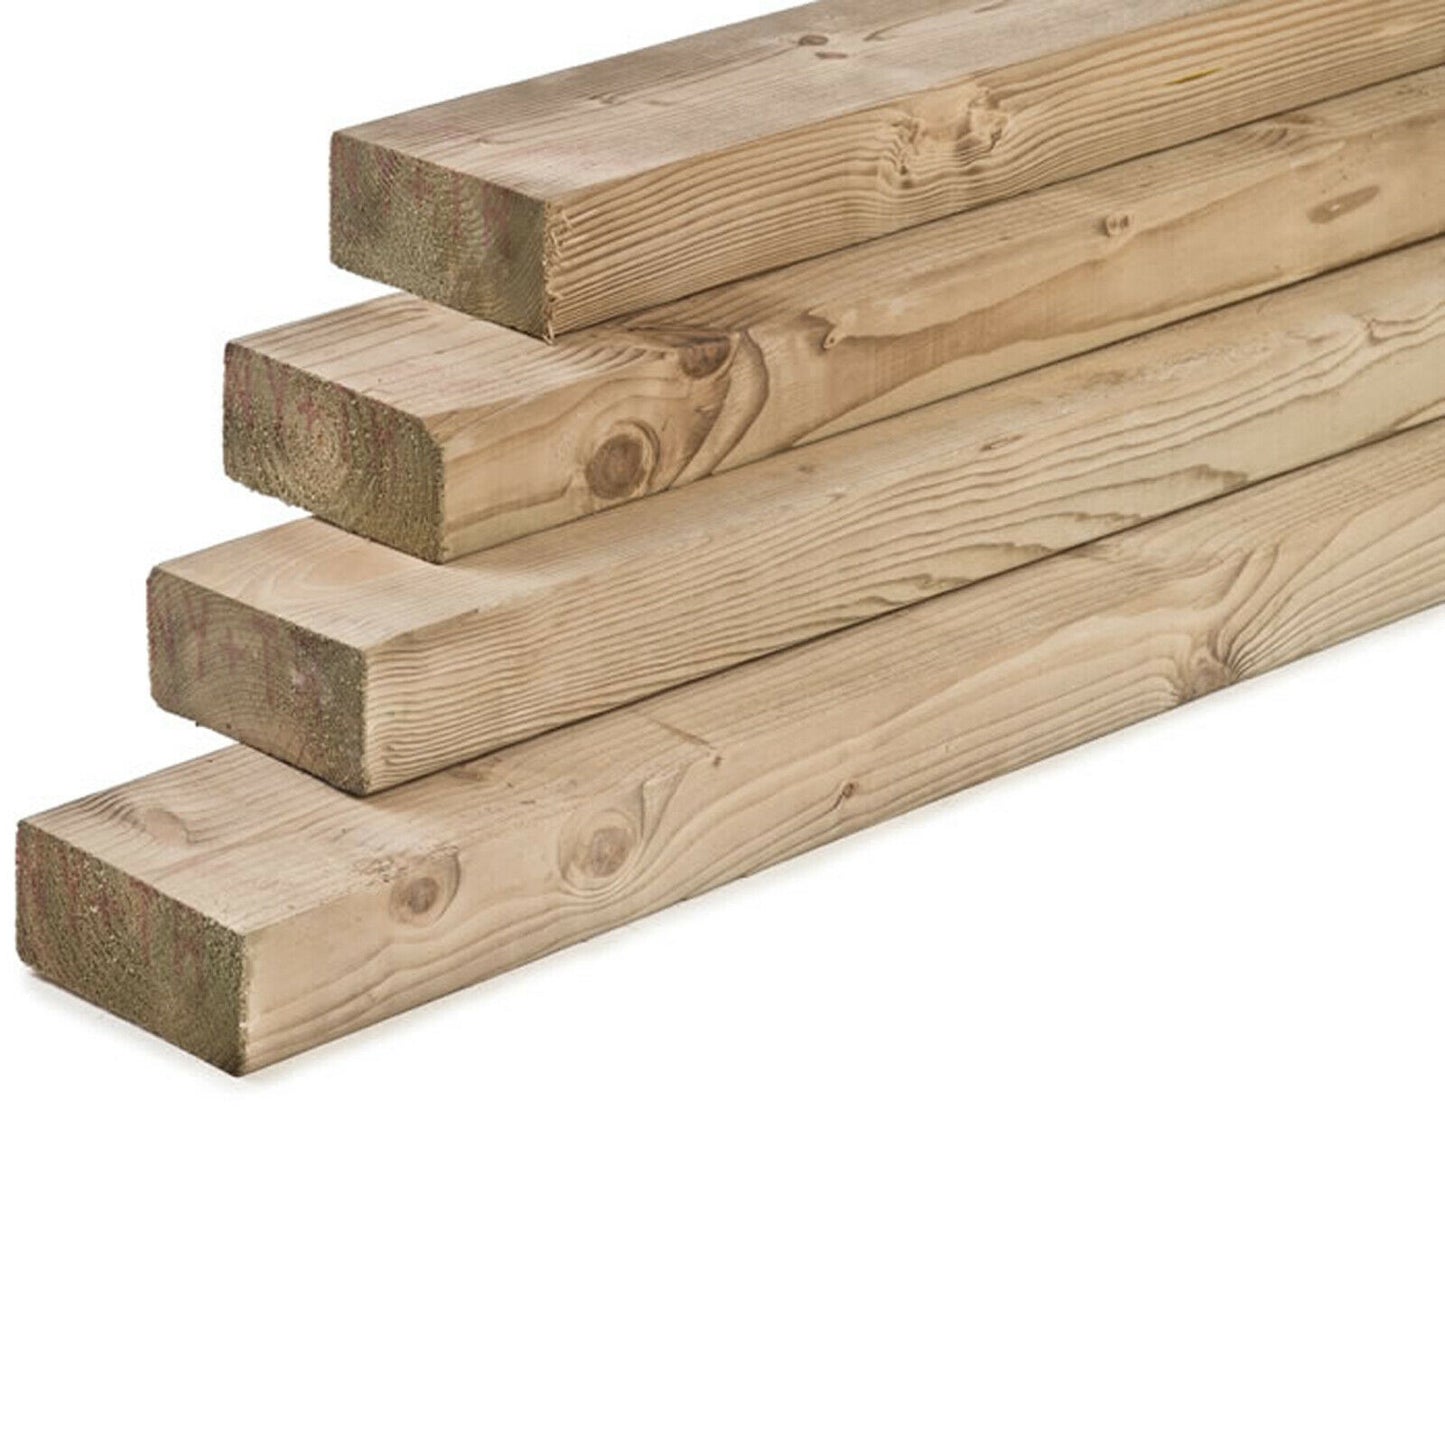 47 x 150 x 3600m Graded C24 Treated Timber (6" x 2")